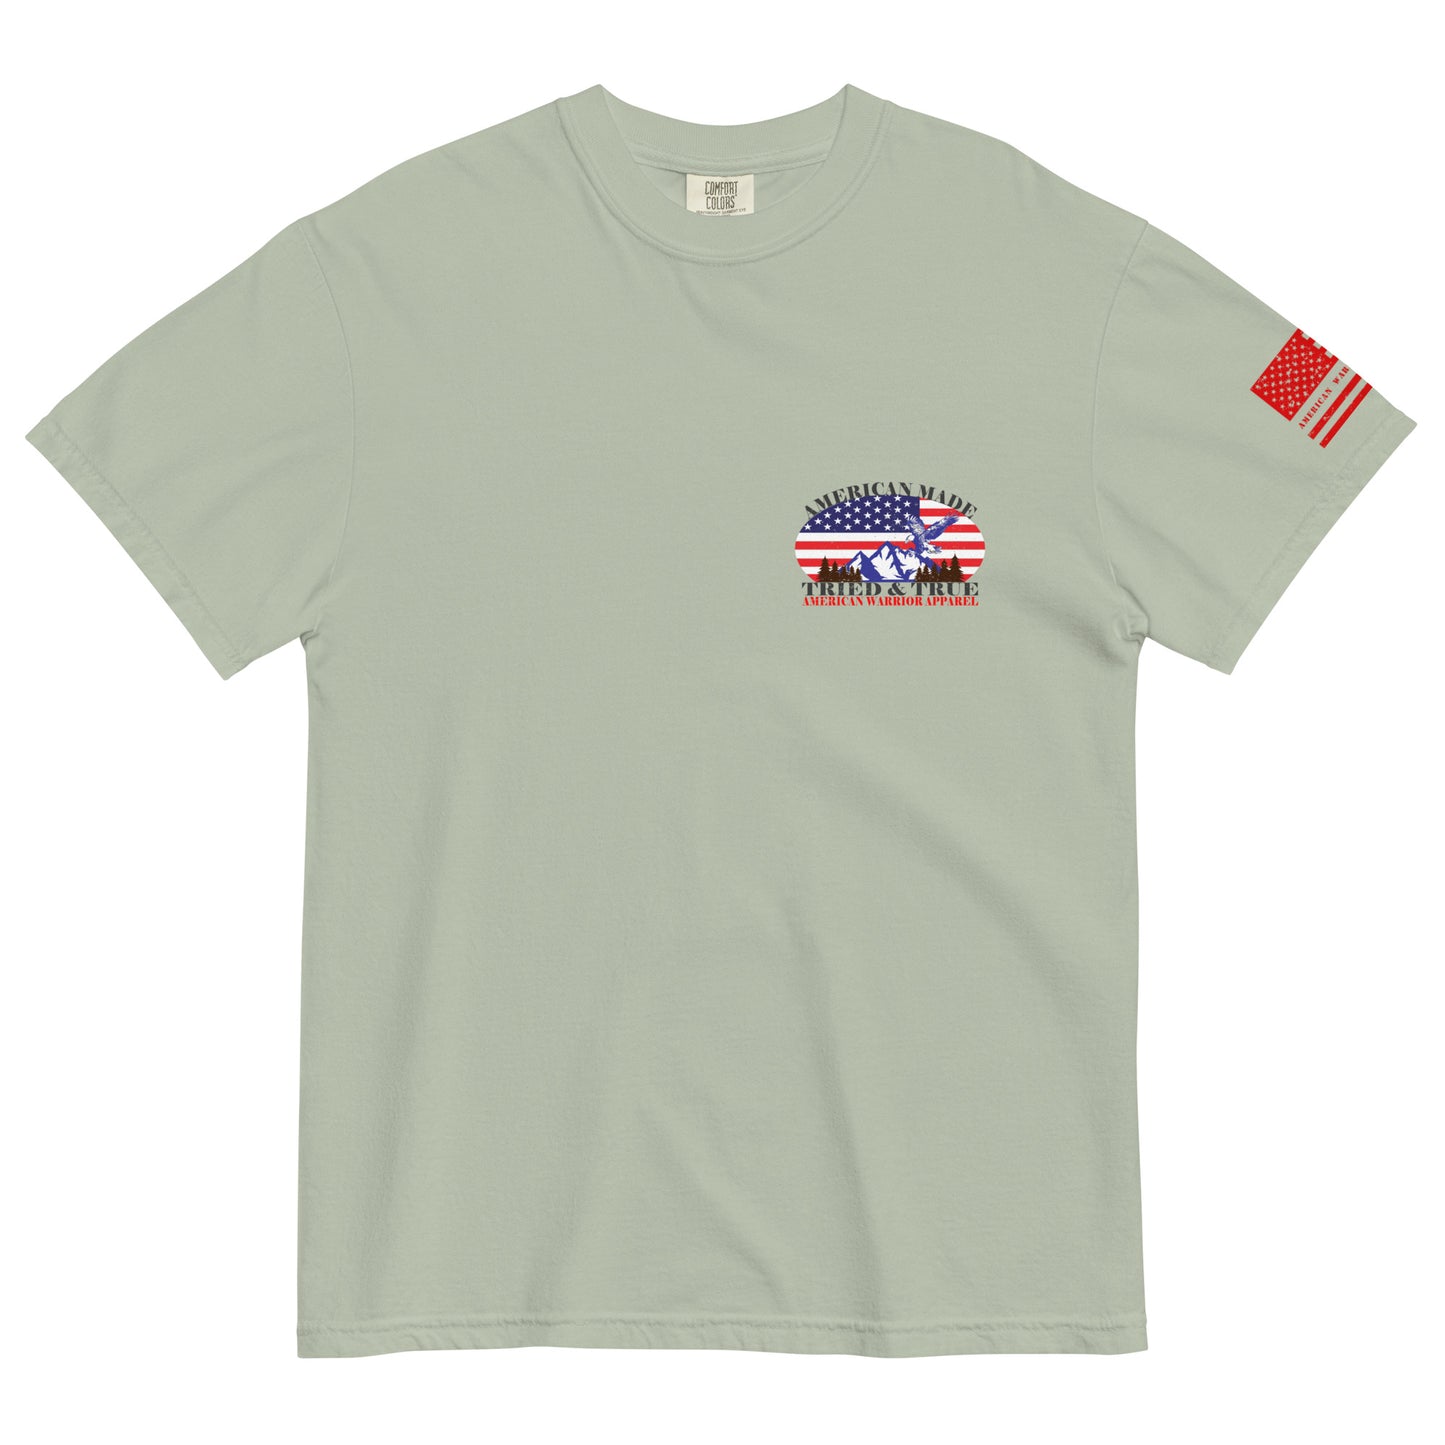 American Made tried & True heavyweight t-shirt